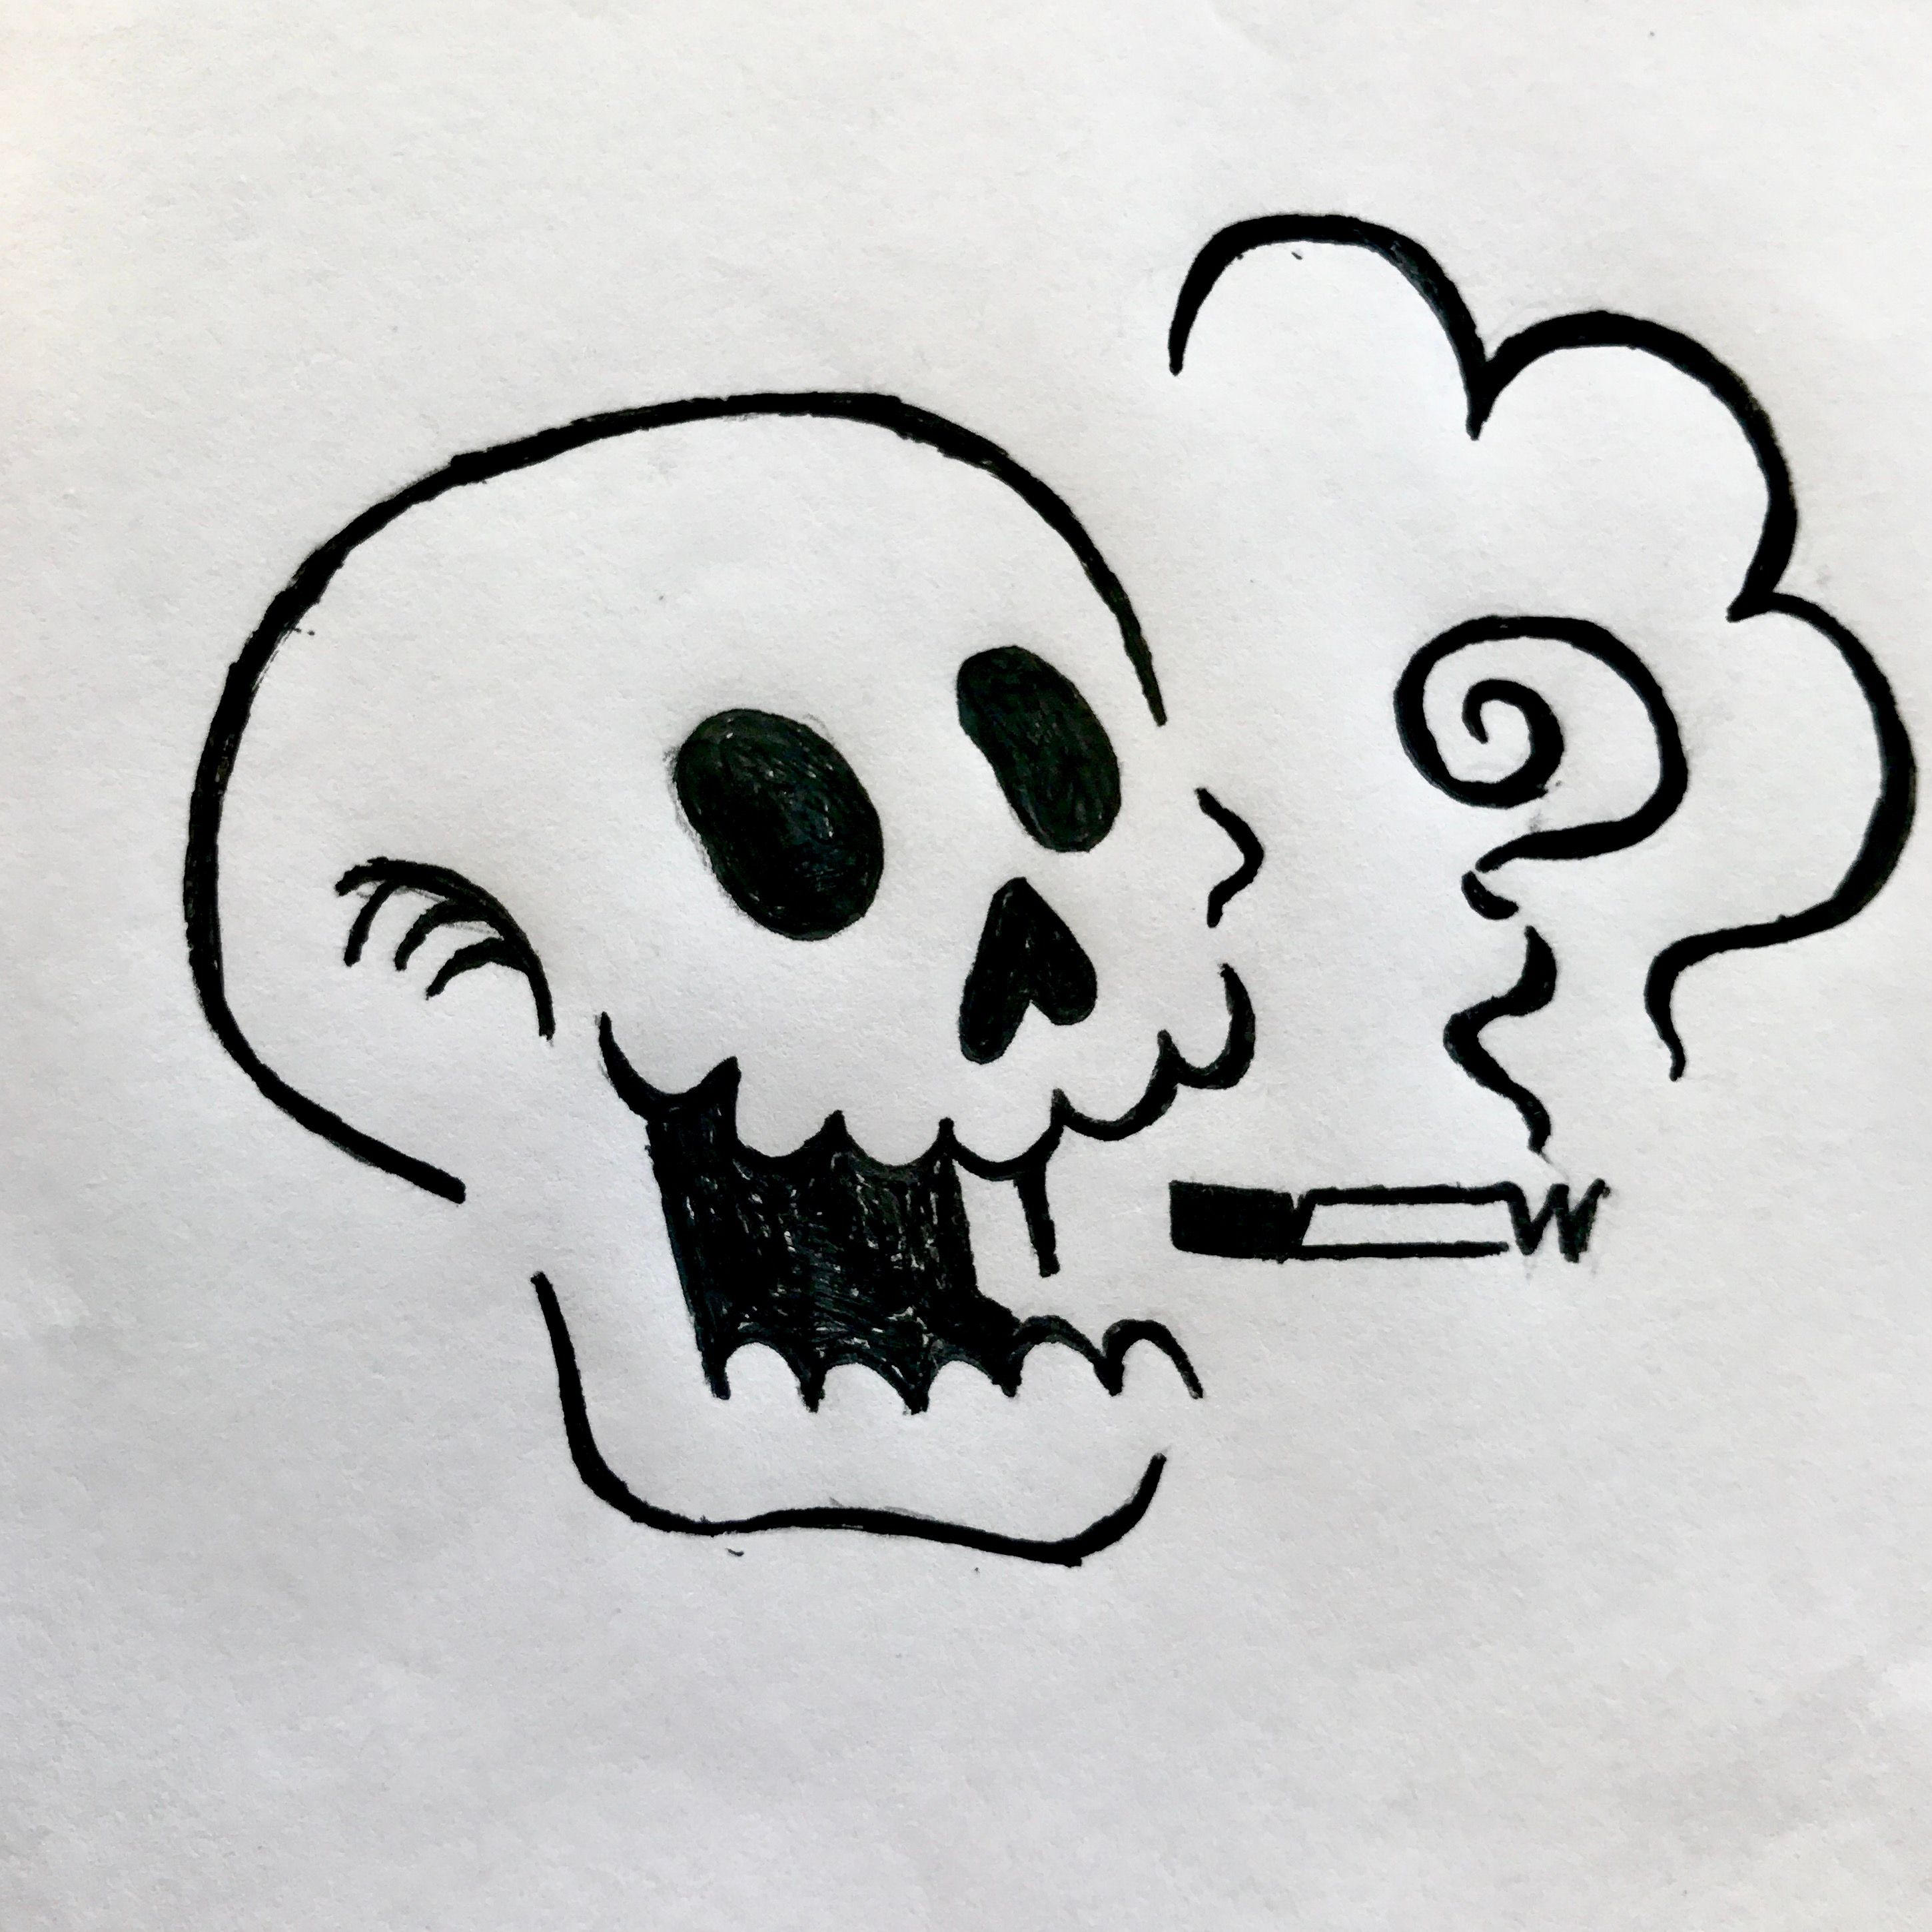 smoking skull animation